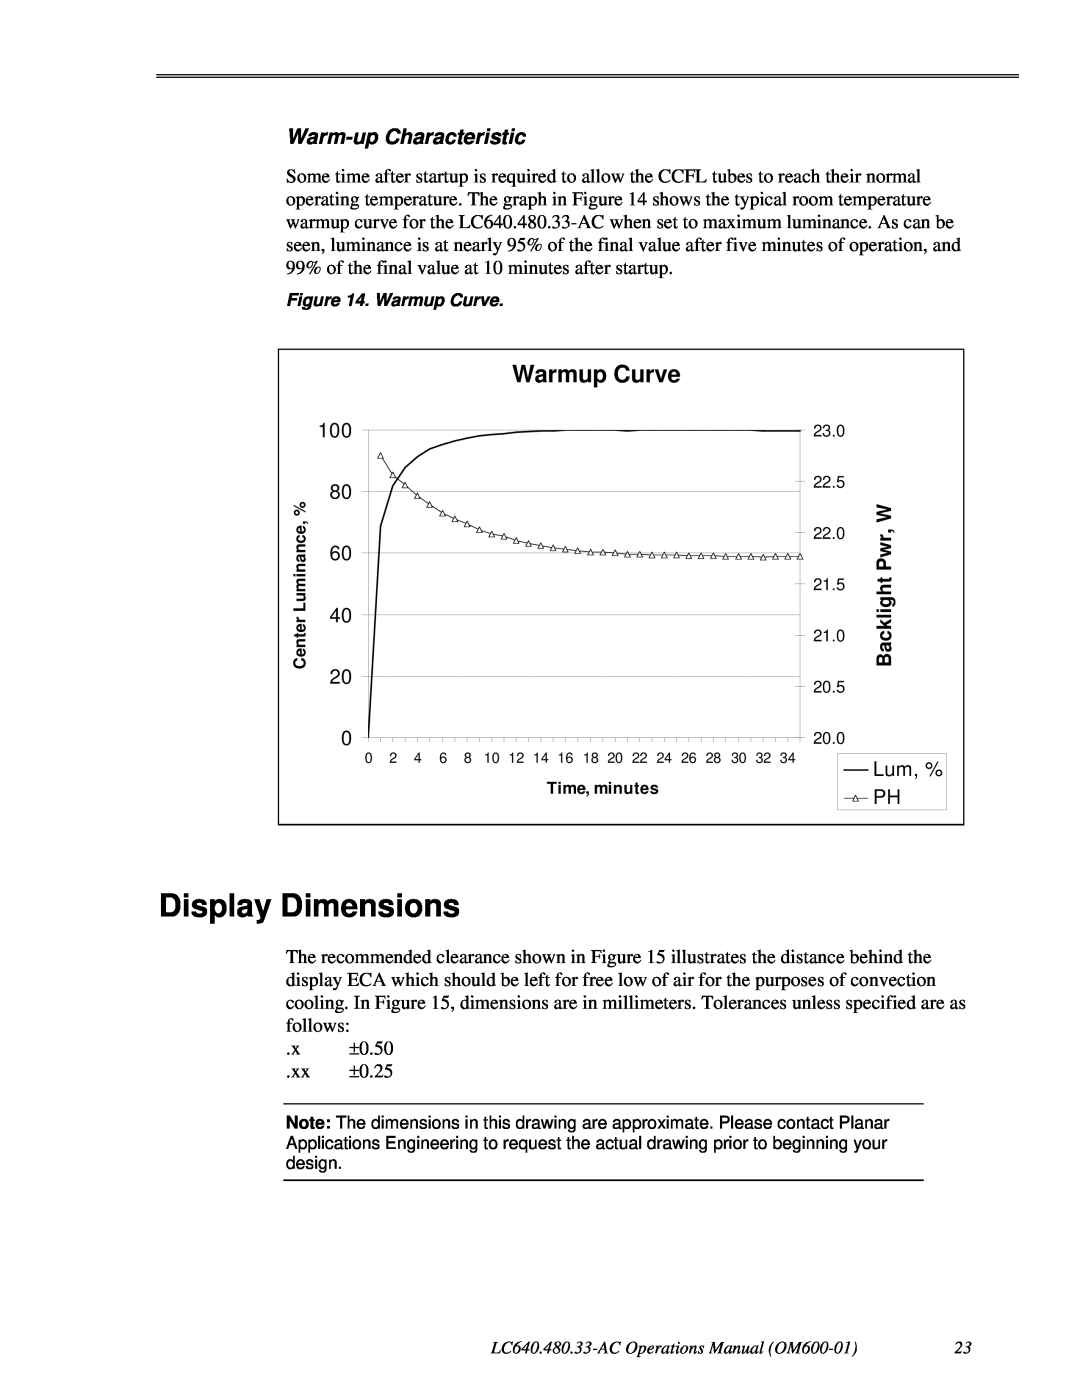 Planar LC640.480.33-AC manual Display Dimensions, Warm-up Characteristic, Warmup Curve 